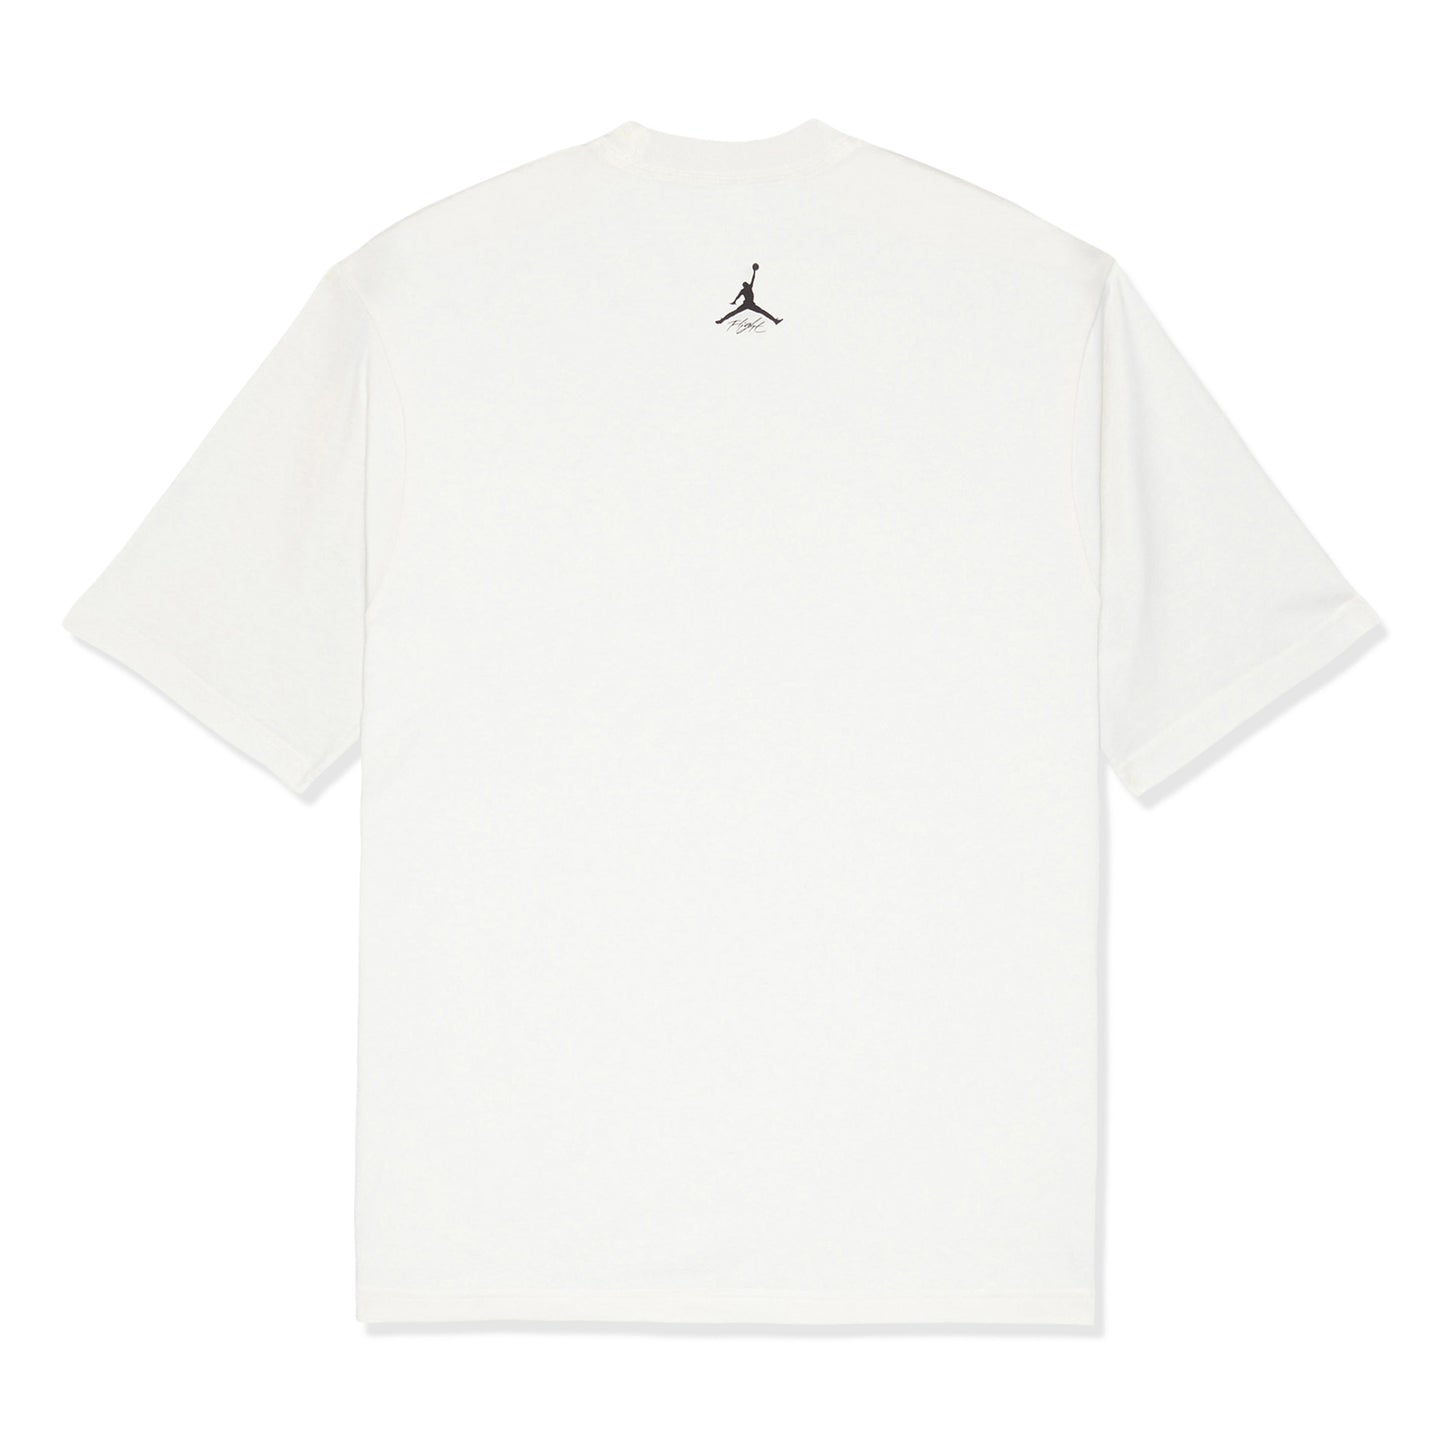 Jordan Flight Heritage T-Shirt (Sail/Black)